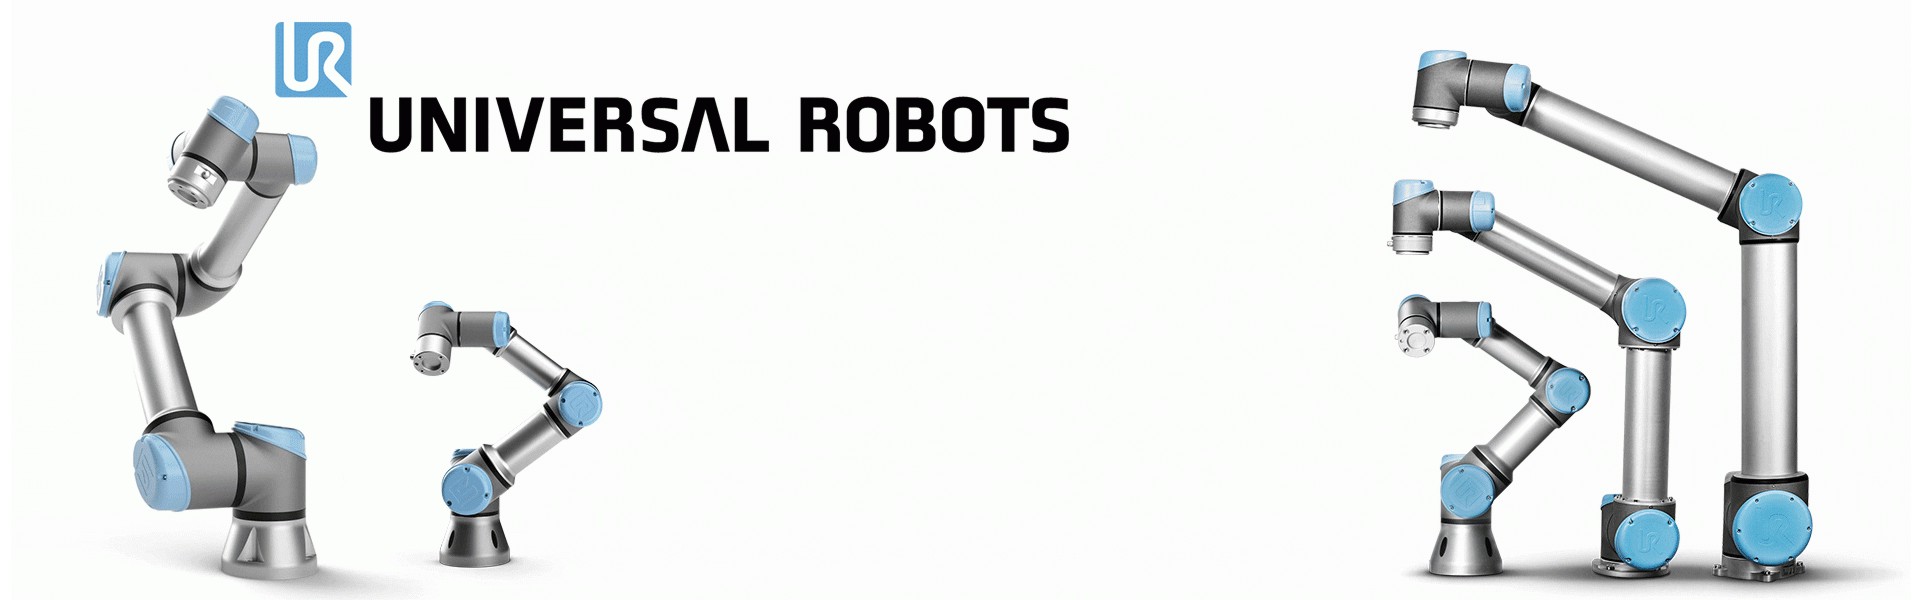 UNIVERSAL ROBOTS